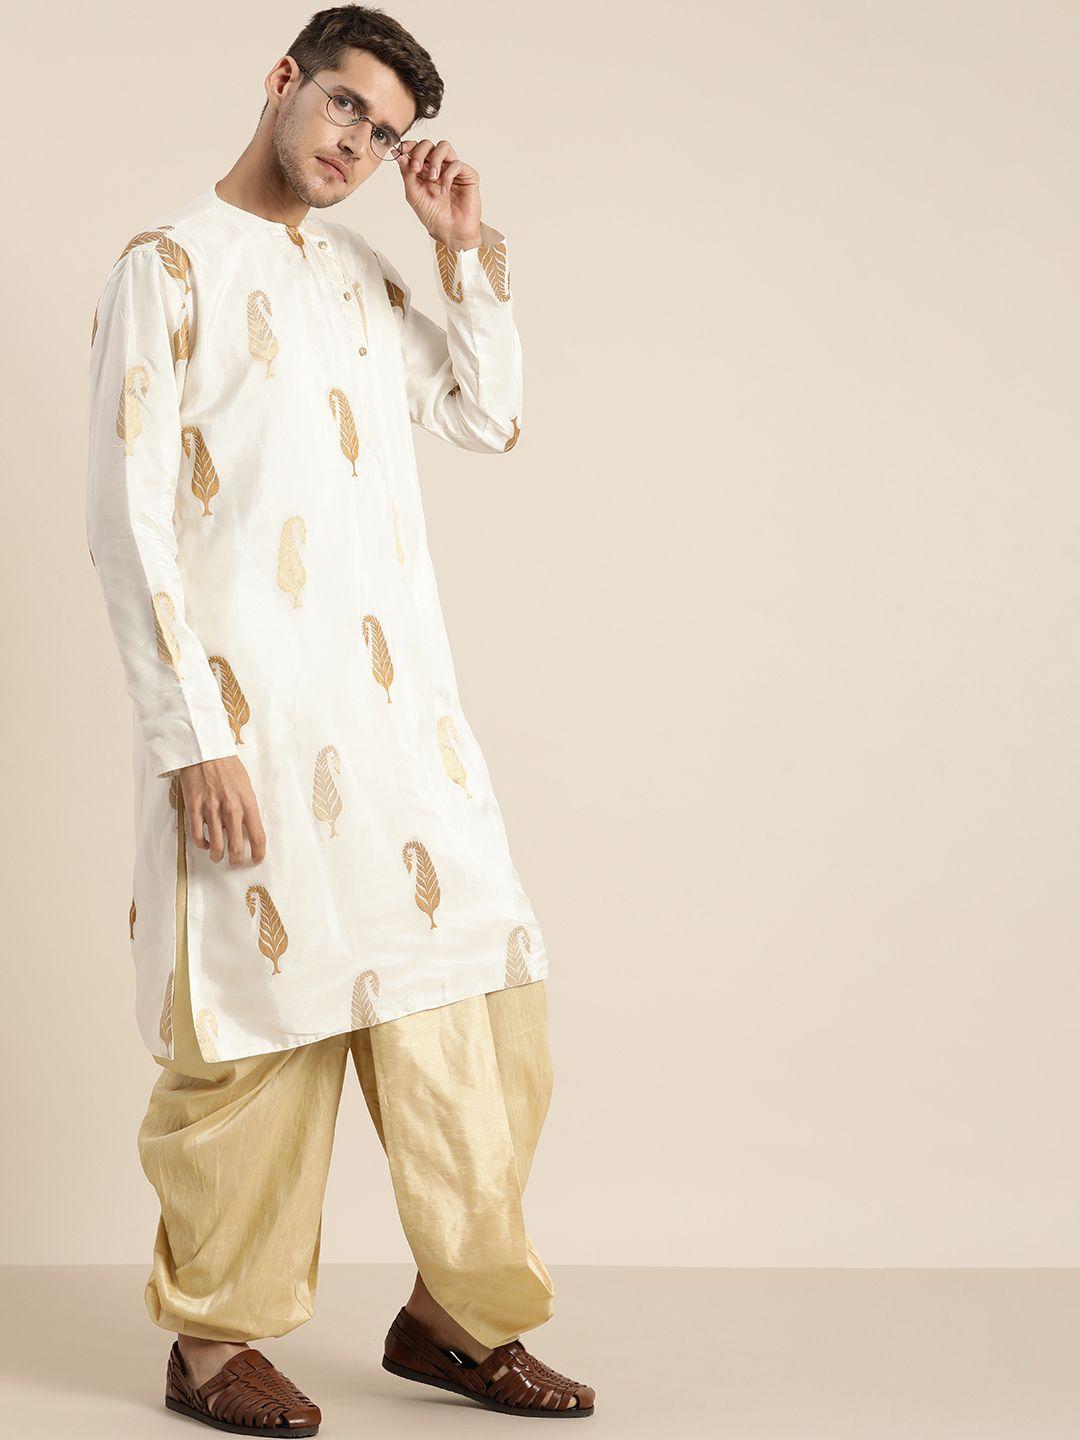 shrestha-by-vastramay-men-white-&-golden-paisley-design-kurta-with-dhoti-pants